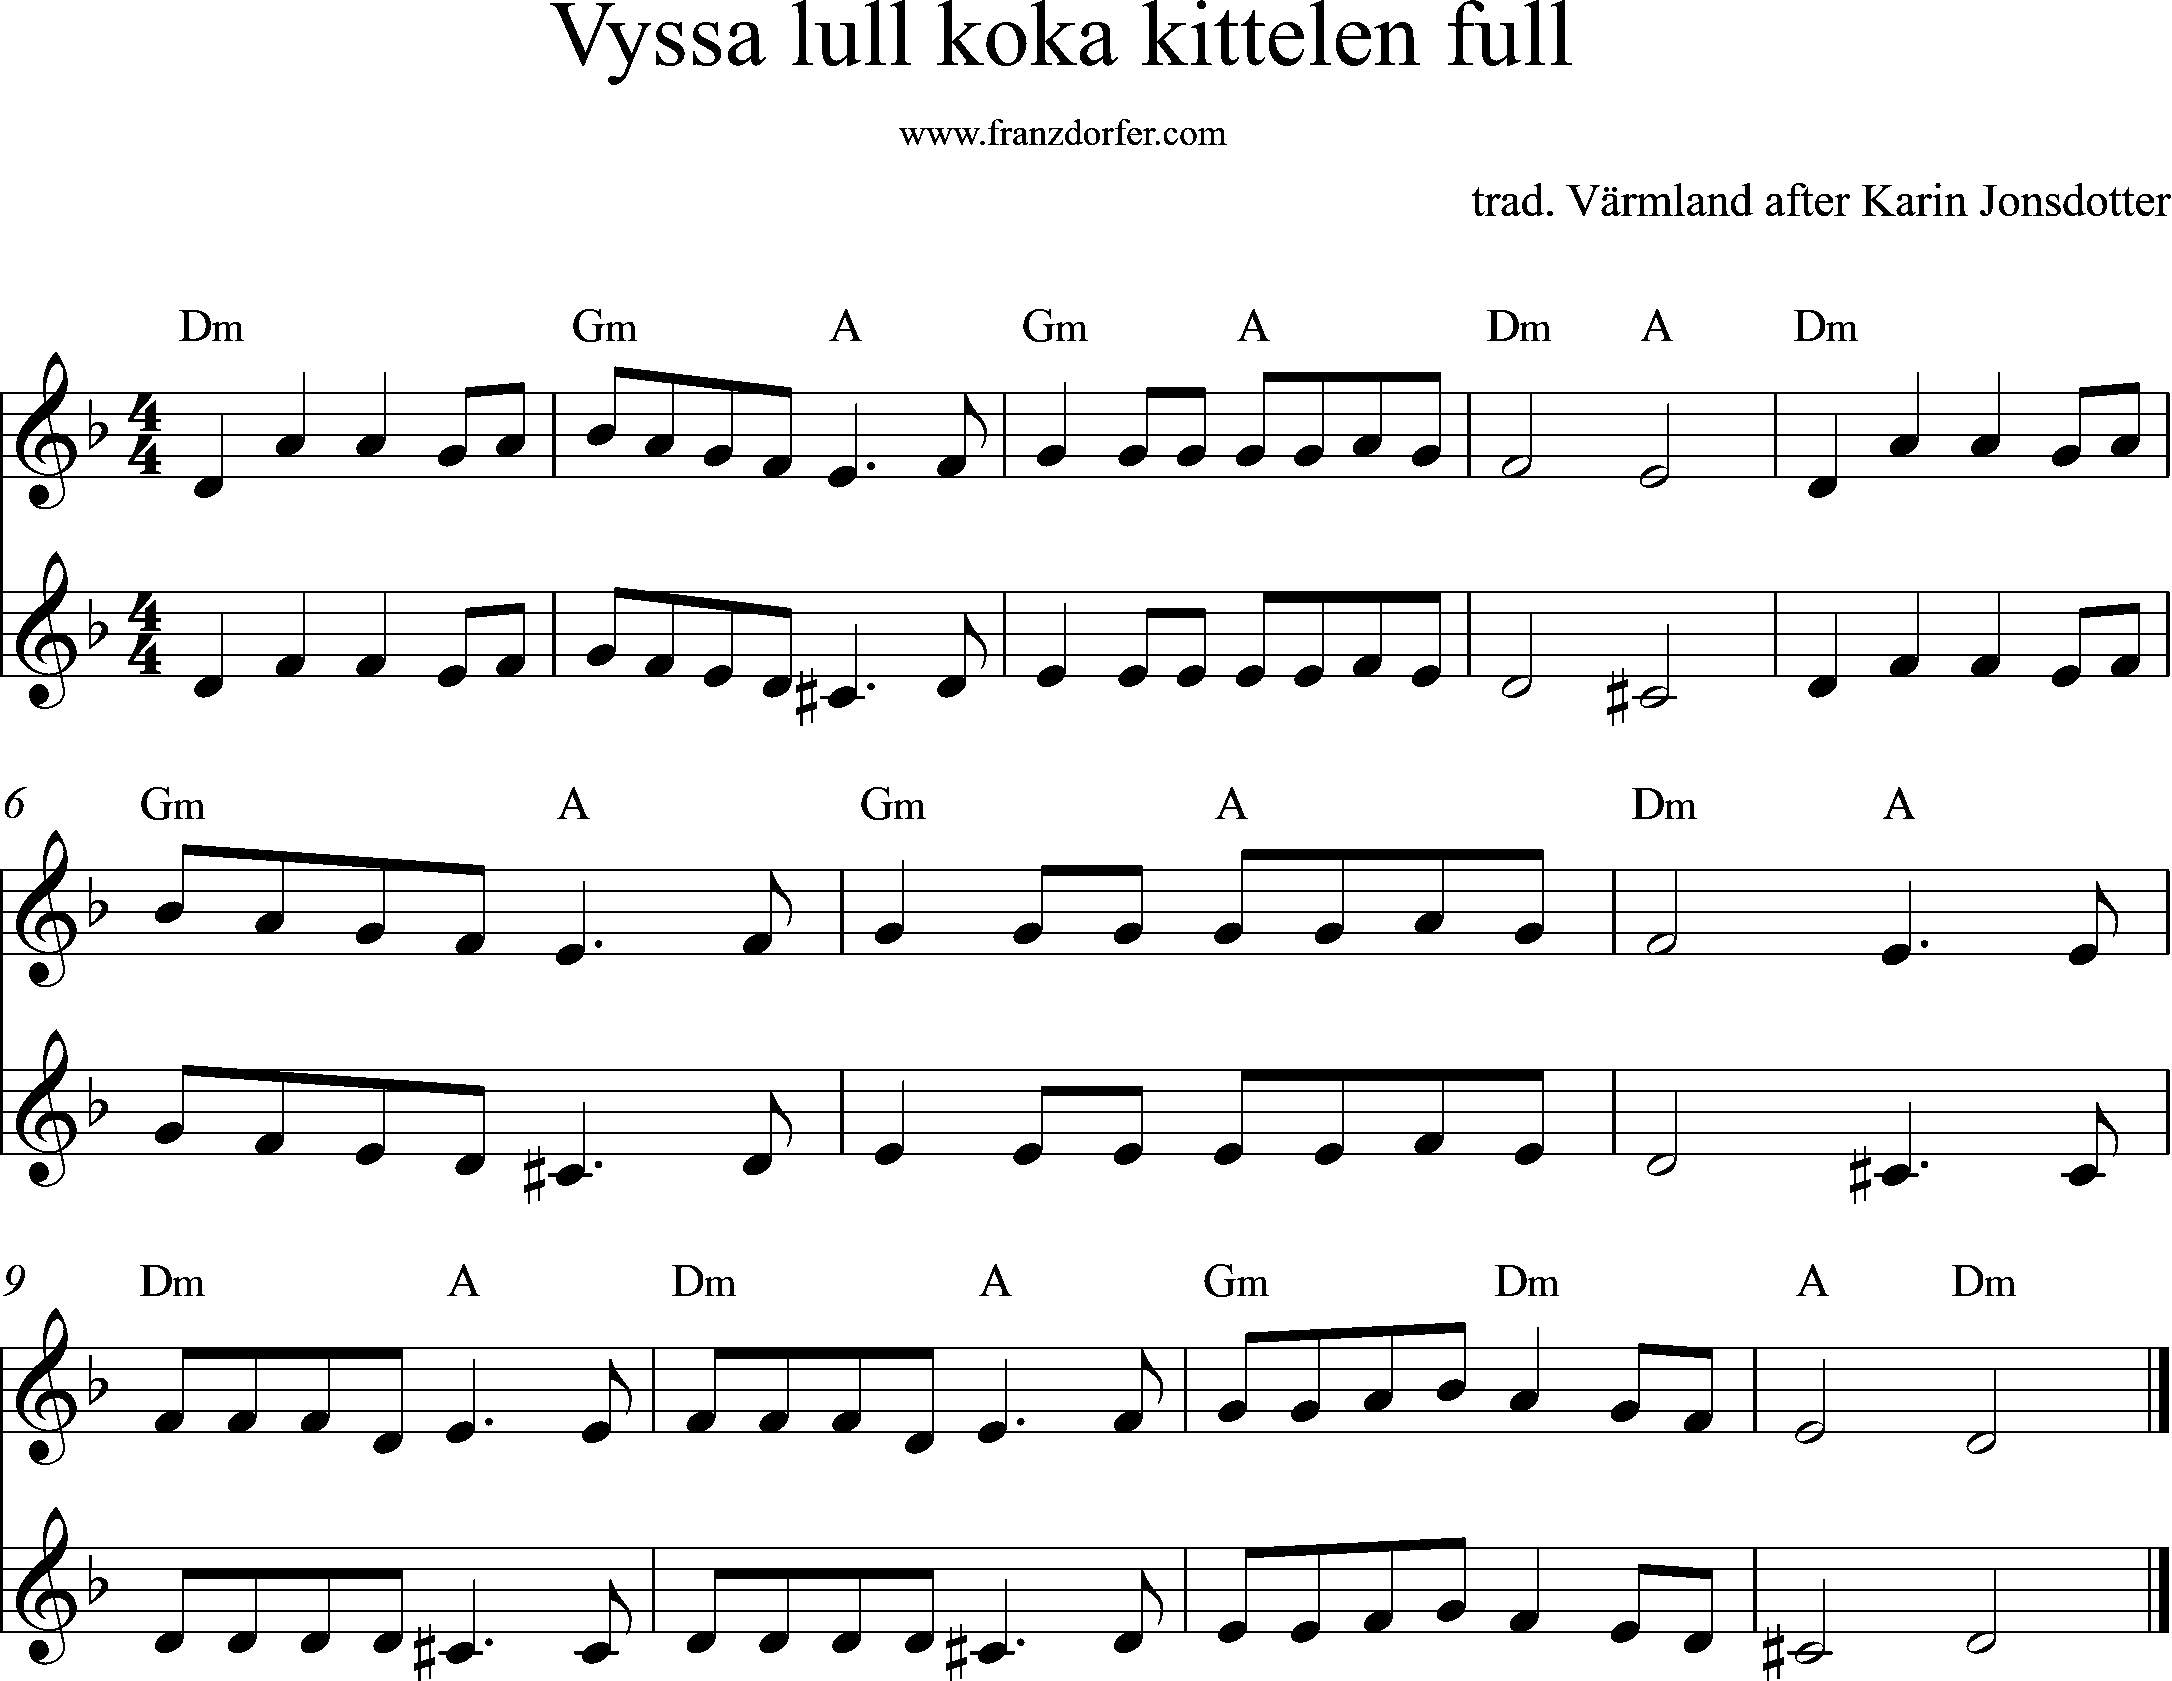 sheetmusic - PDF Sheetmusic -Vyssa lull koka kittelen full, dm